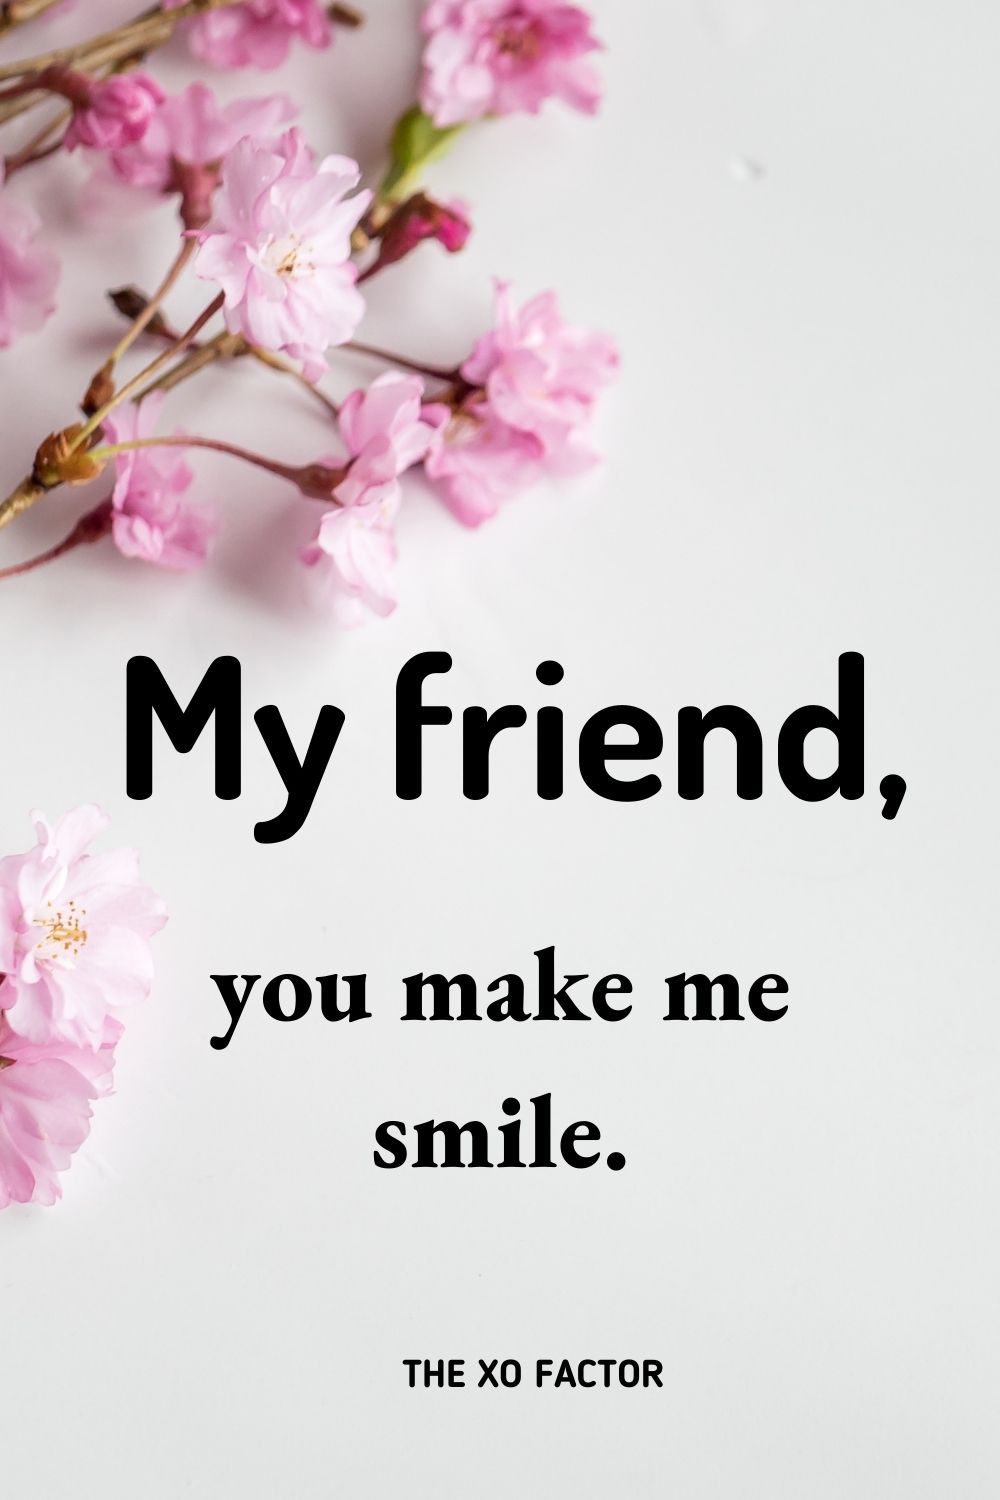 My friend, you make me smile.